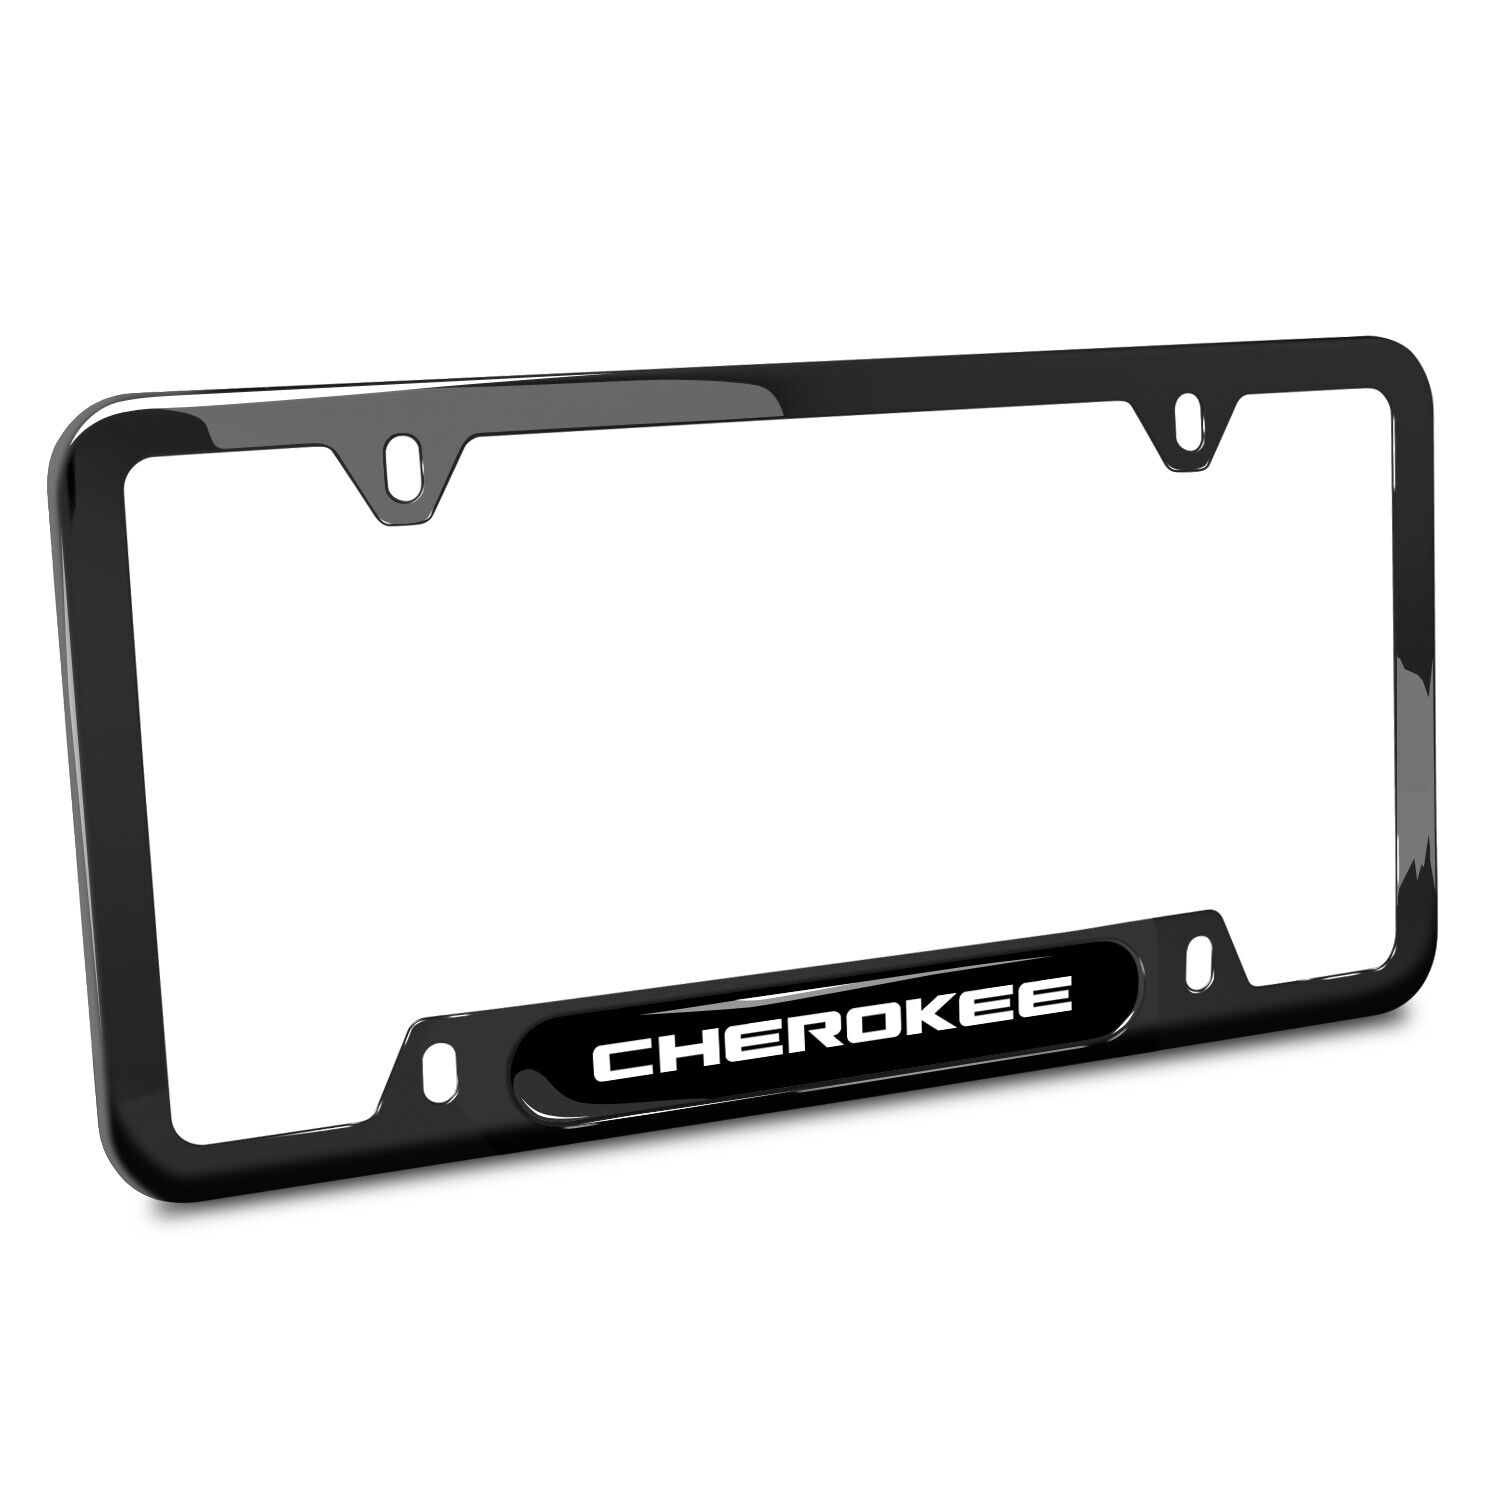 Jeep Cherokee Black Insert Black Stainless Steel License Plate Frame